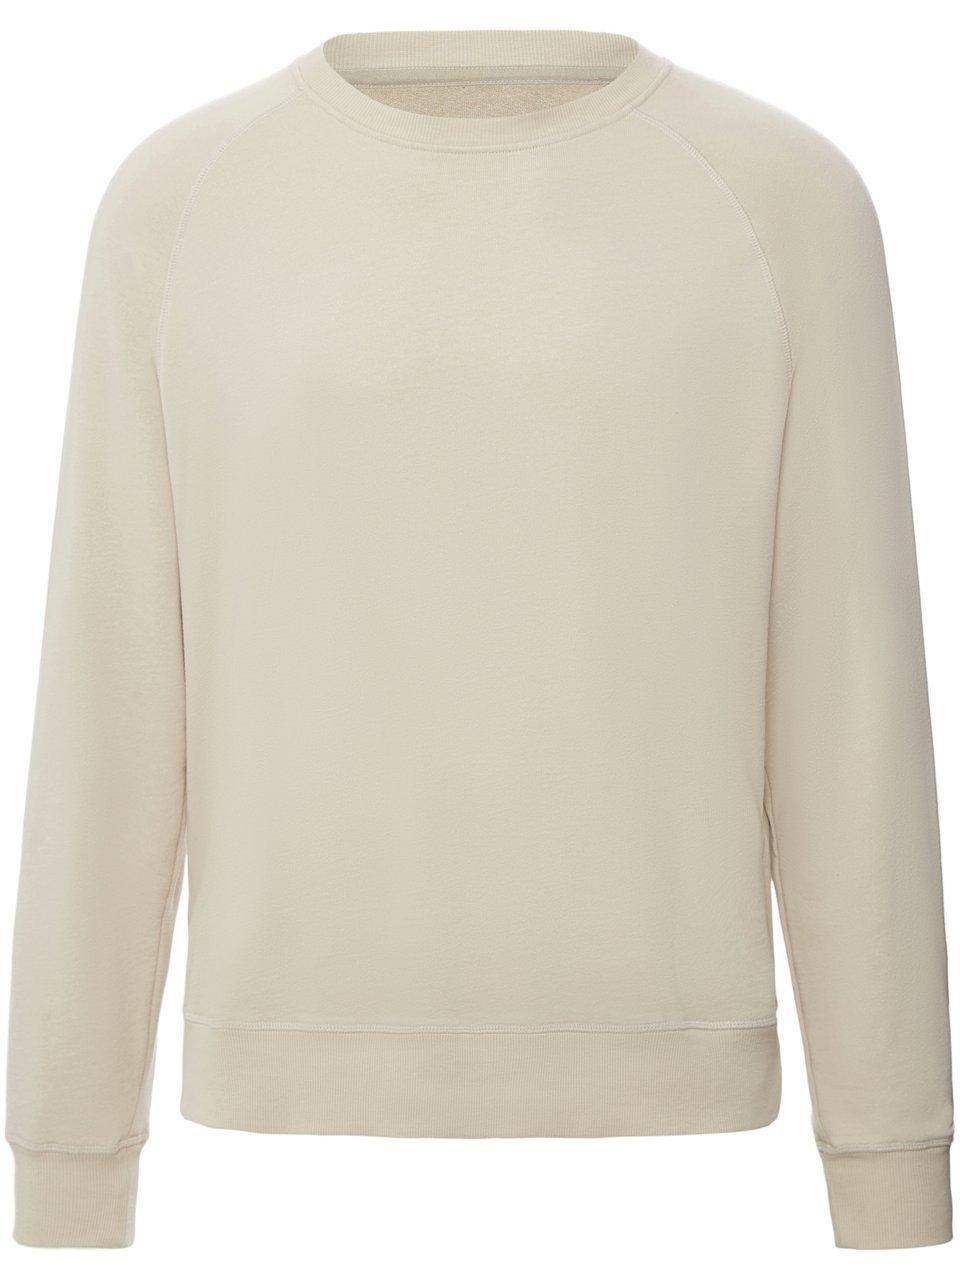 Le sweatshirt 100% coton  Juvia beige